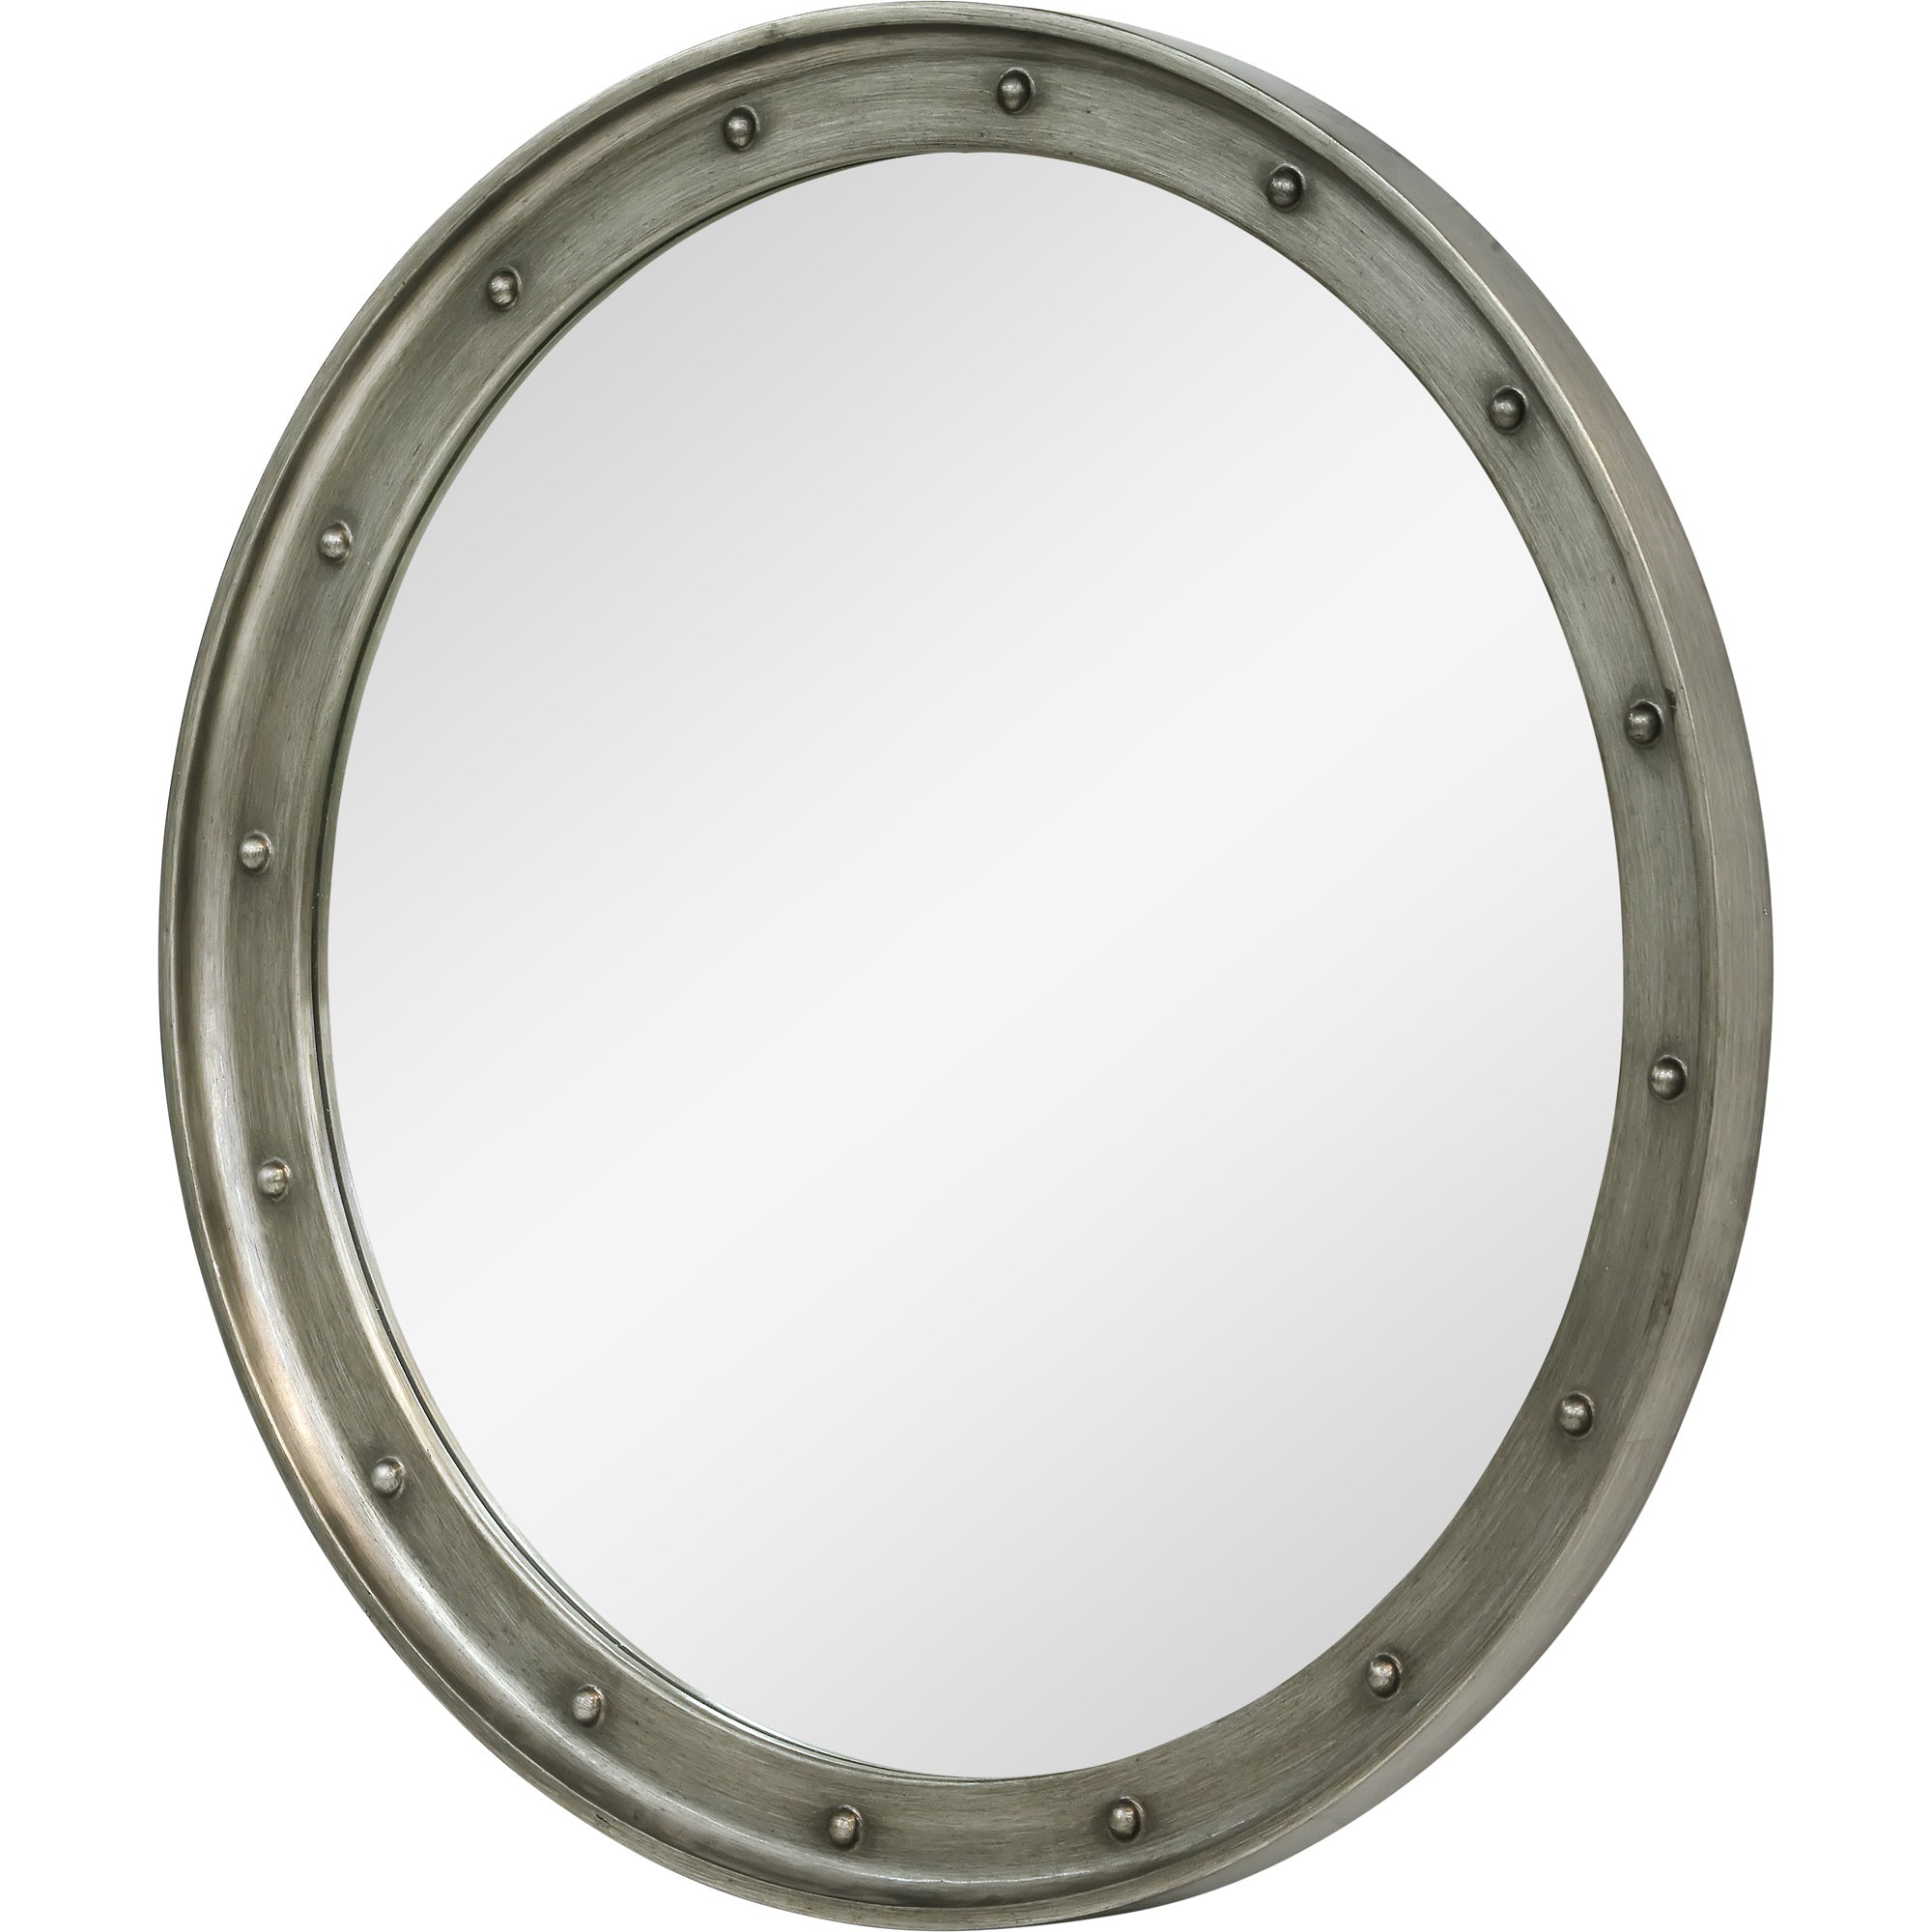 MELVA round wall mirror